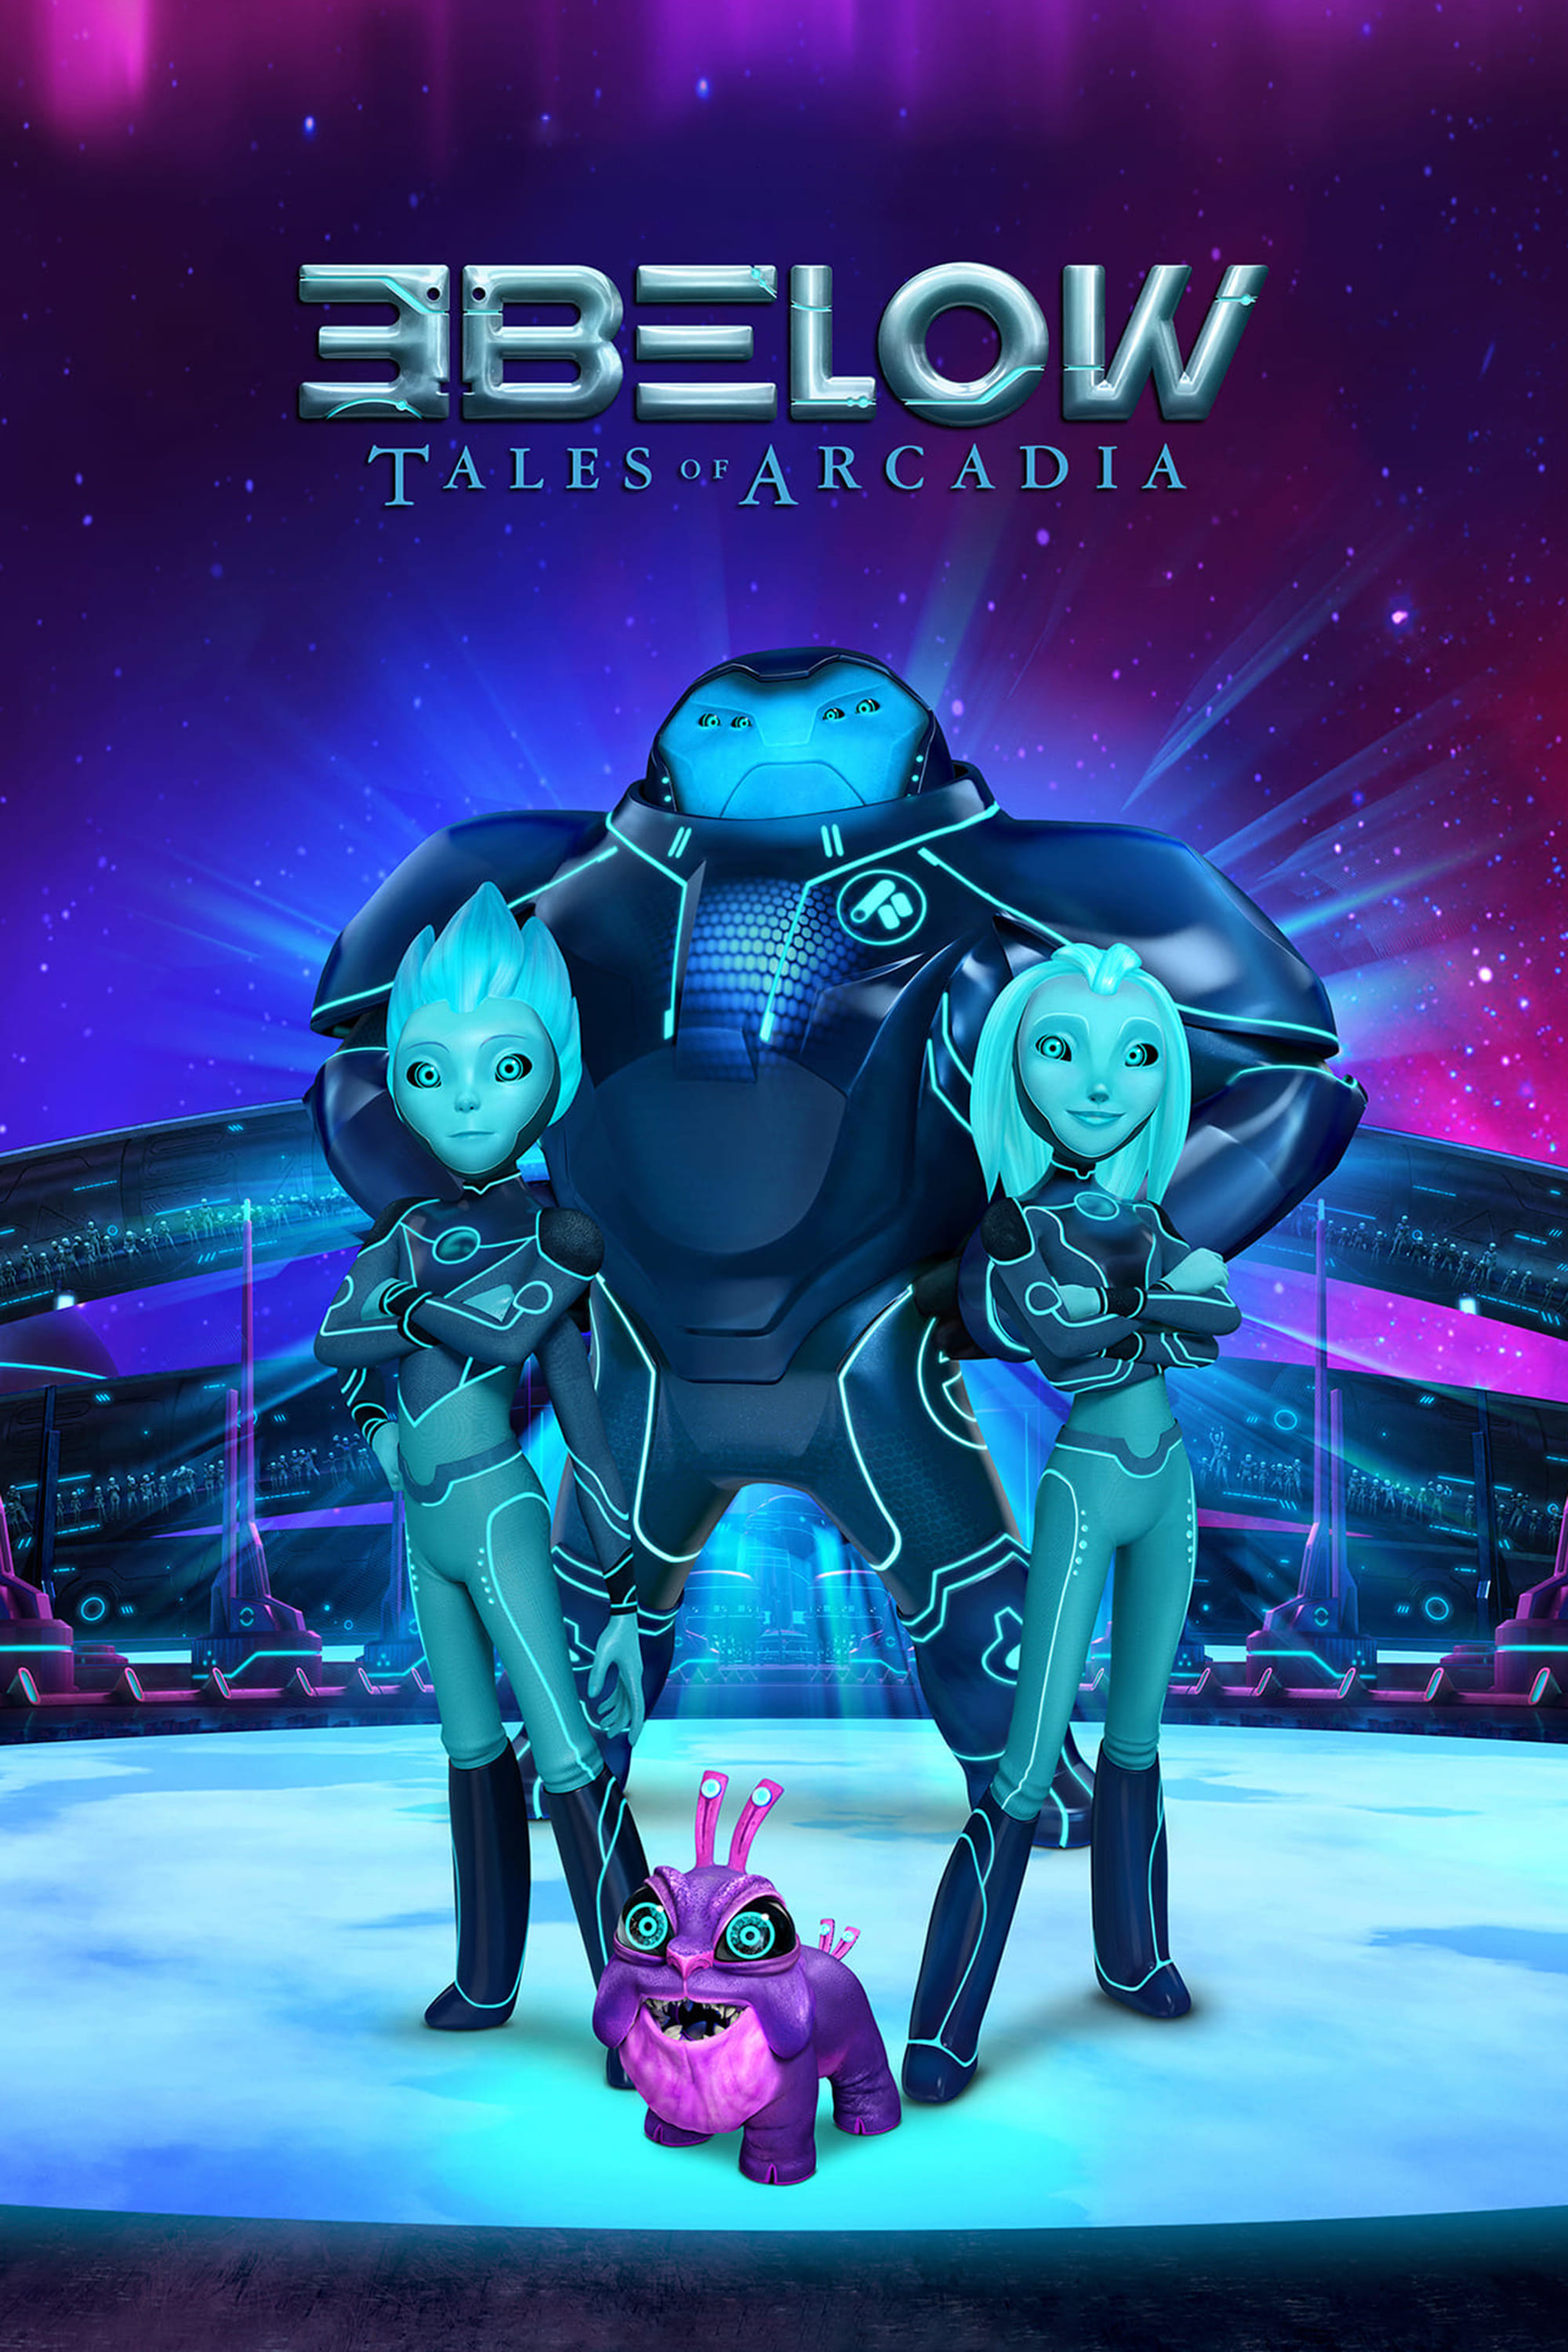 3Below: Tales of Arcadia poster